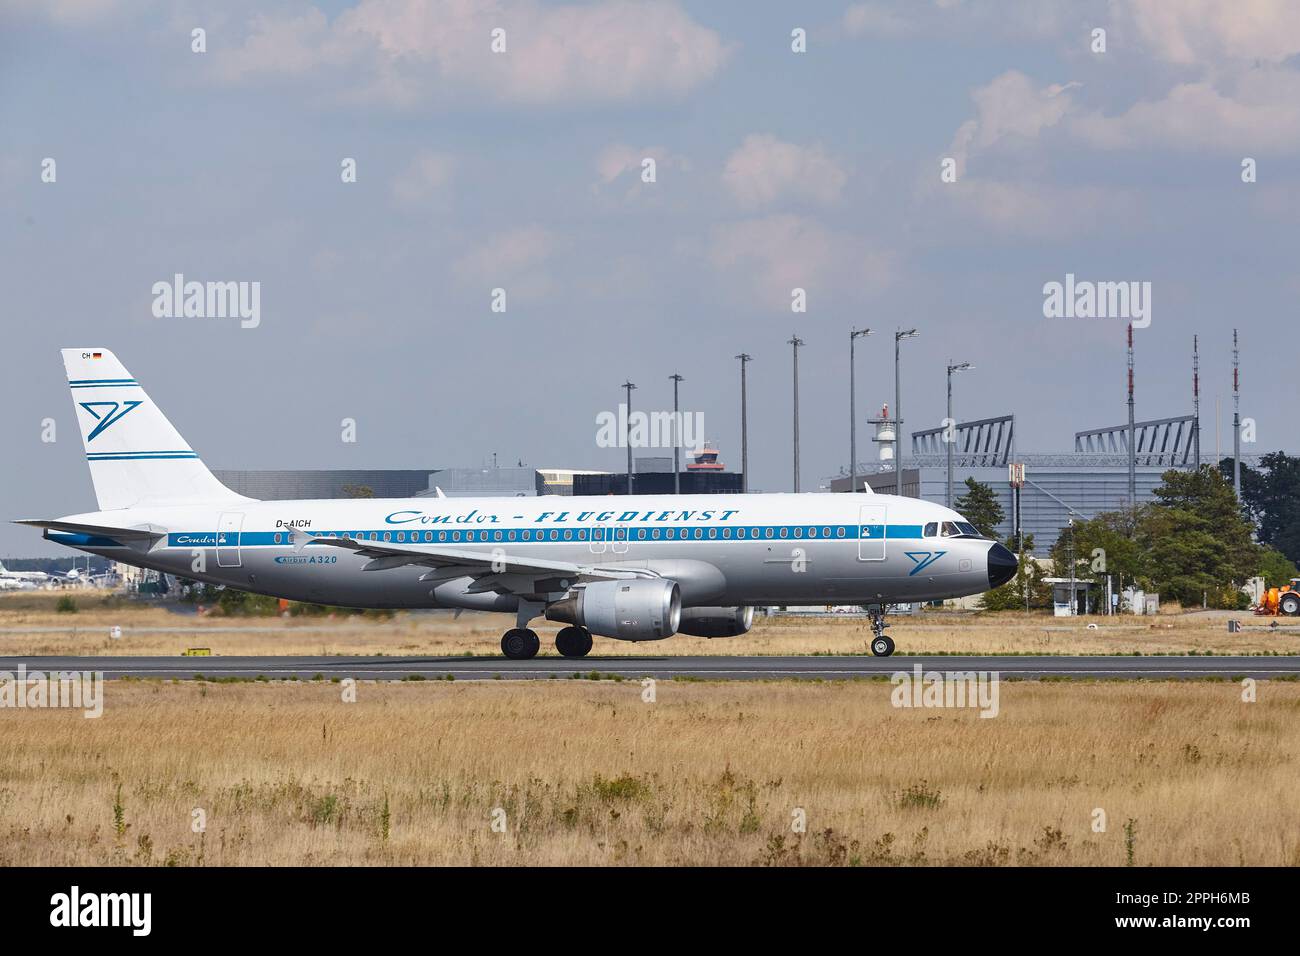 Frankfurt Airport Fraport - Airbus A320-212 of Condor (Retro Livery) takes off Stock Photo